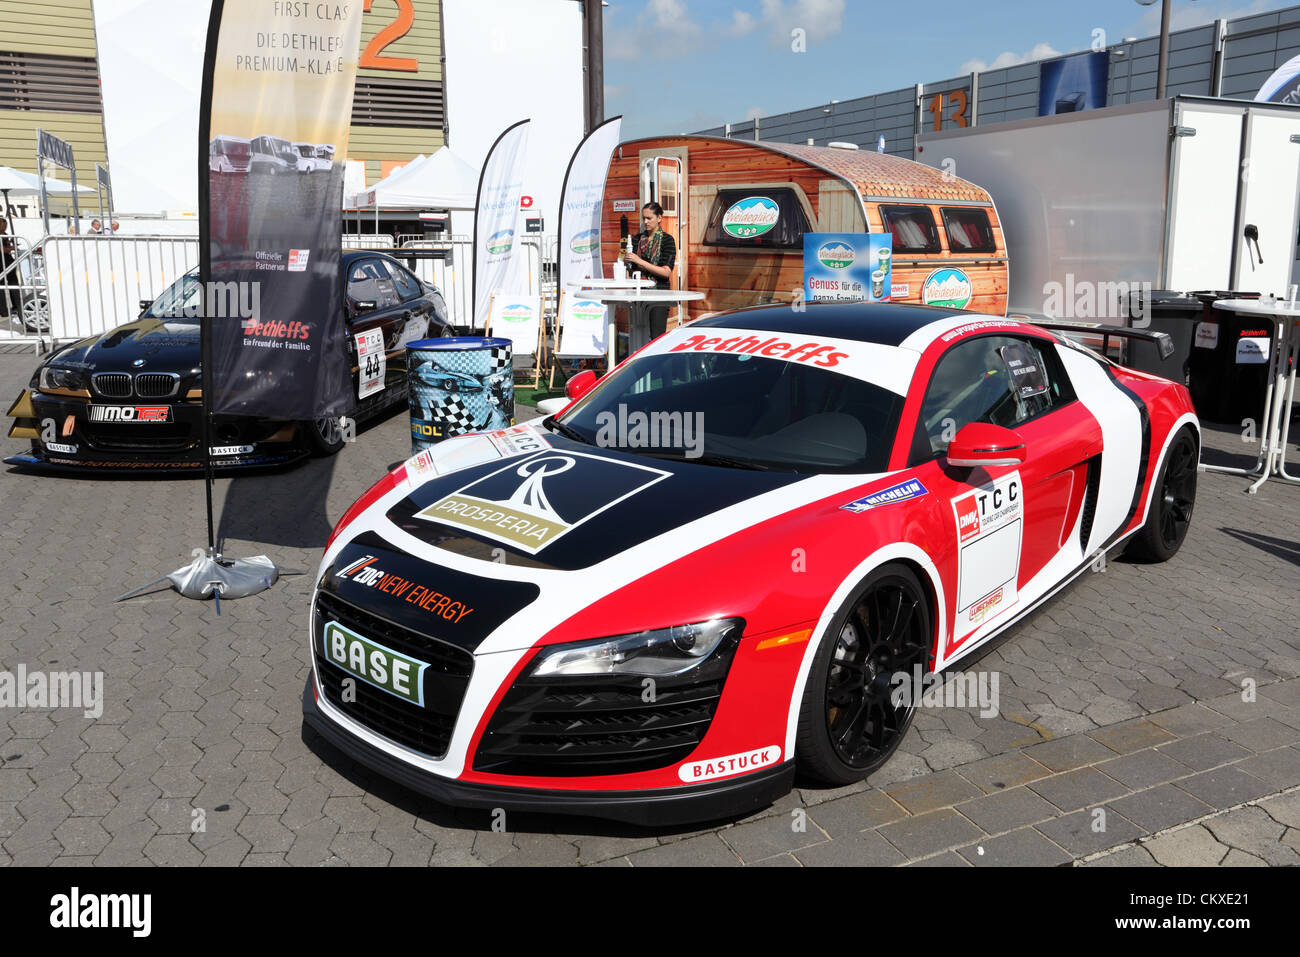 August 27, 2012 in Dusseldorf, Germany. Dethleffs sponsored Audi R8 race car at the Caravan Salon Exhibition 2012. Stock Photo